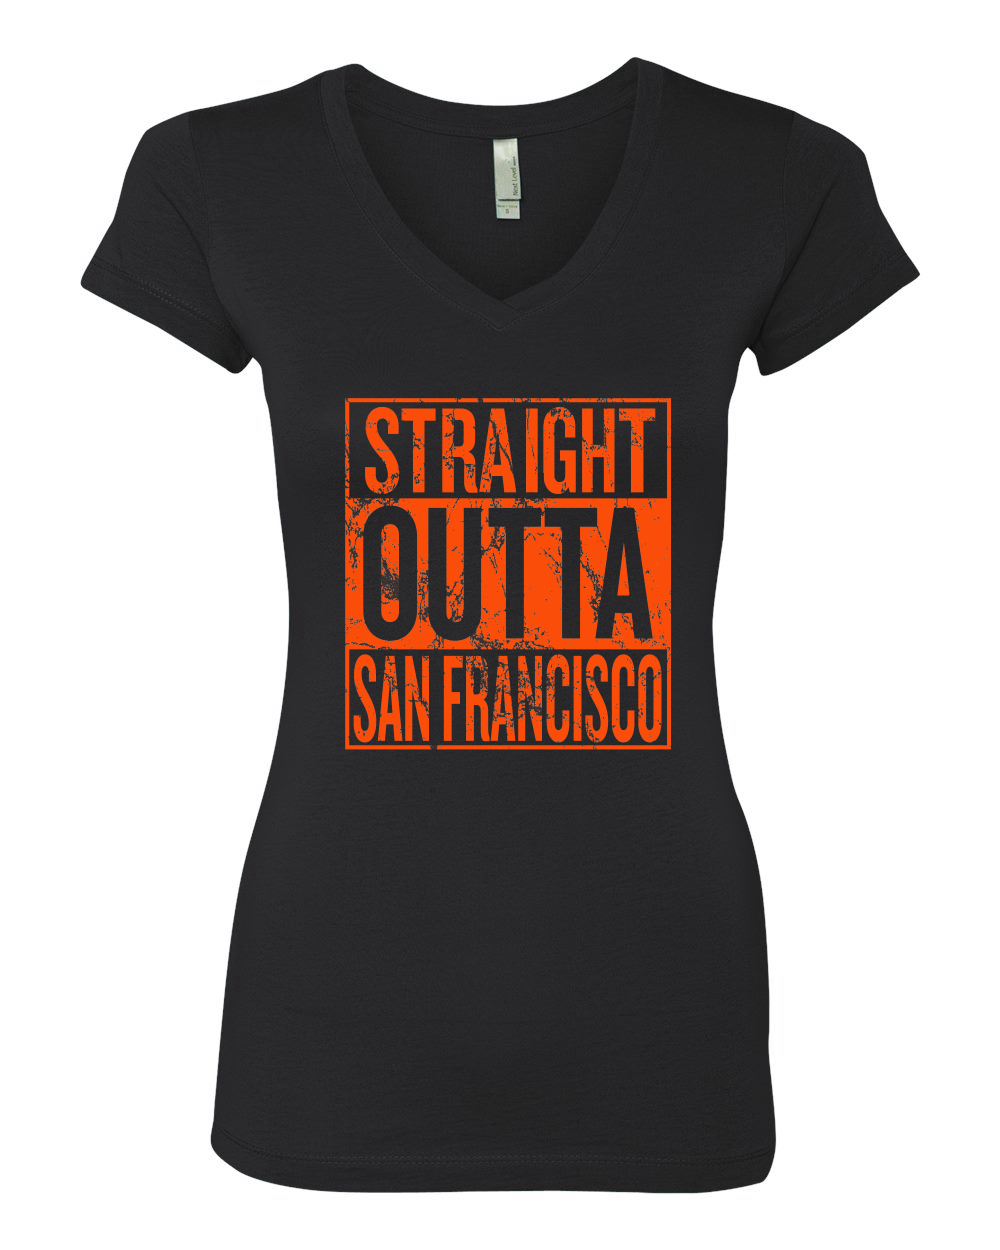 Straight Outta San Francisco SF Fan | Fantasy Baseball Fans | Womens Sports Slim Fit Junior V-Neck Tee, Black, Small - image 2 of 4